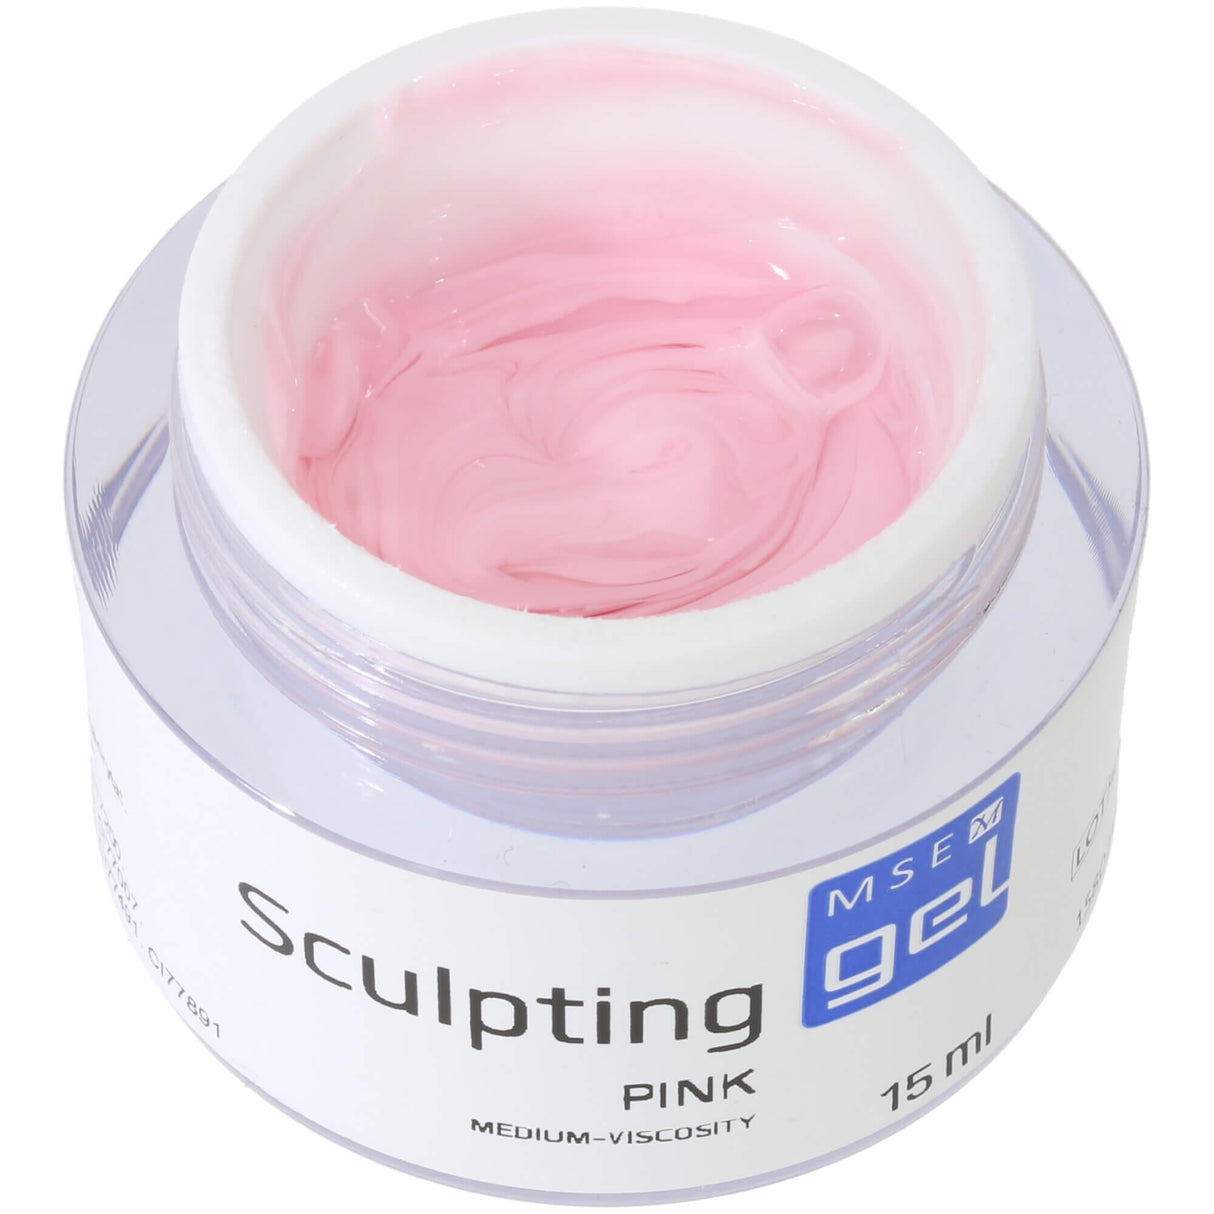 MSE Gel 807: Schablonen Gel pink mittelviskose / Sculpting pink medium-viscosity 15ml - MSE - The Beauty Company